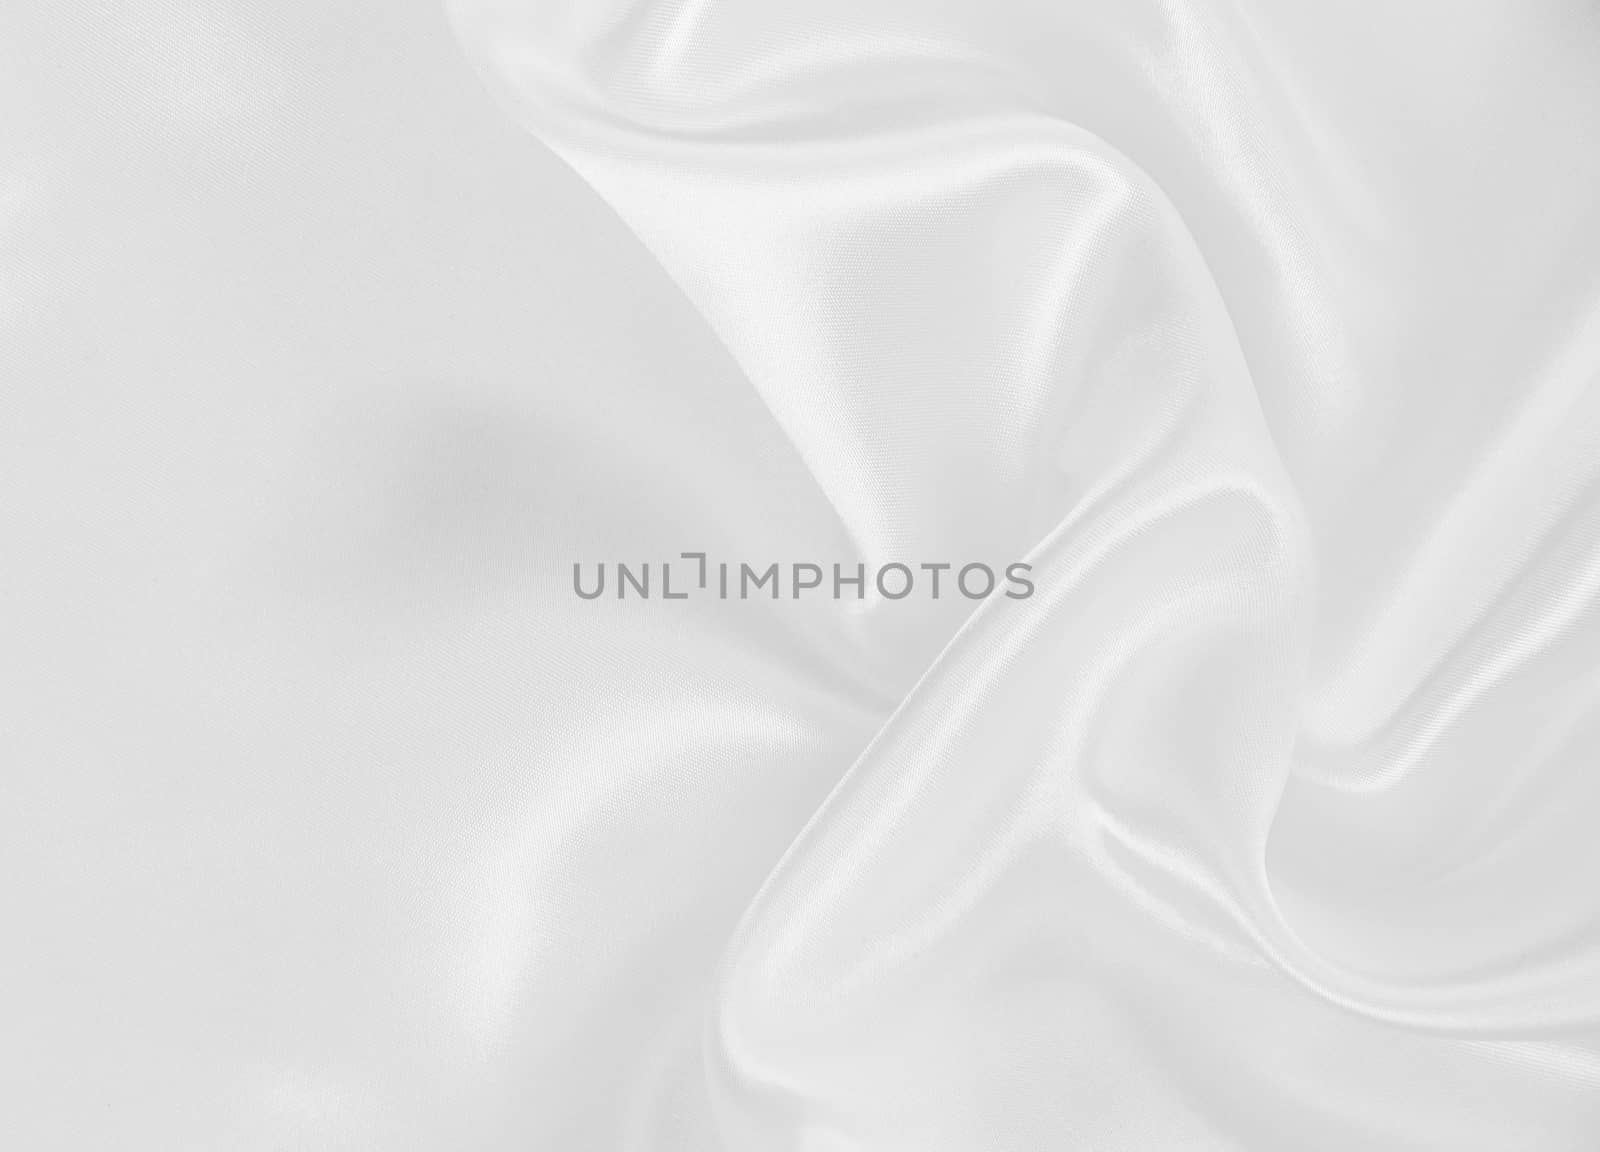 Smooth elegant white silk or satin texture as wedding background by oxanatravel